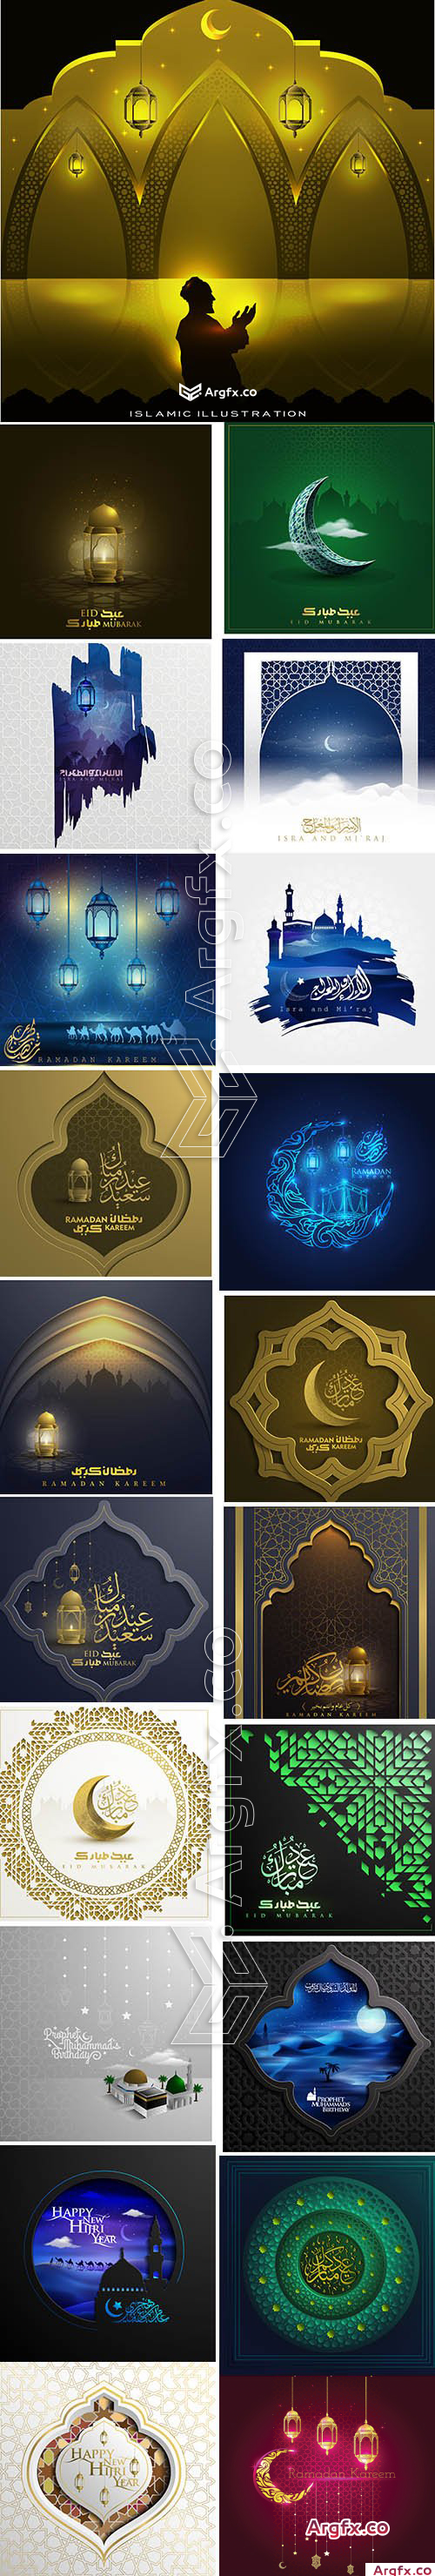 Greeting Islamic Illustration Design with Arabic Calligraphy